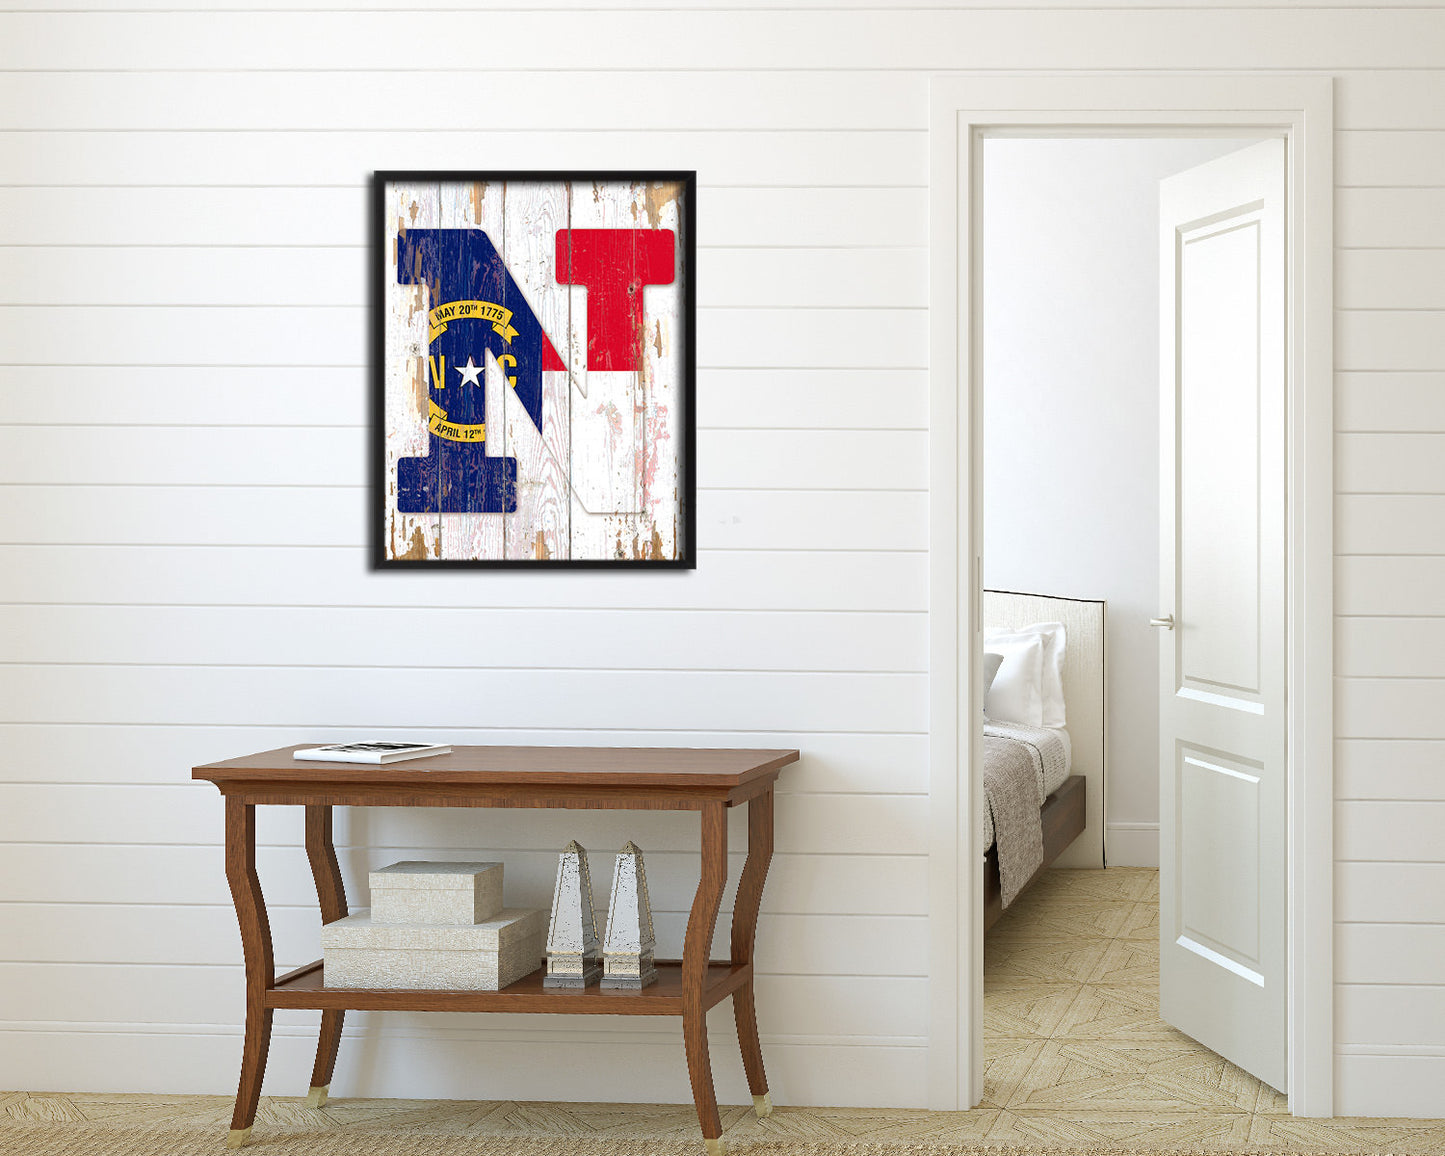 North Carolina State Initial Flag Wood Framed Paper Print Decor Wall Art Gifts, Beach